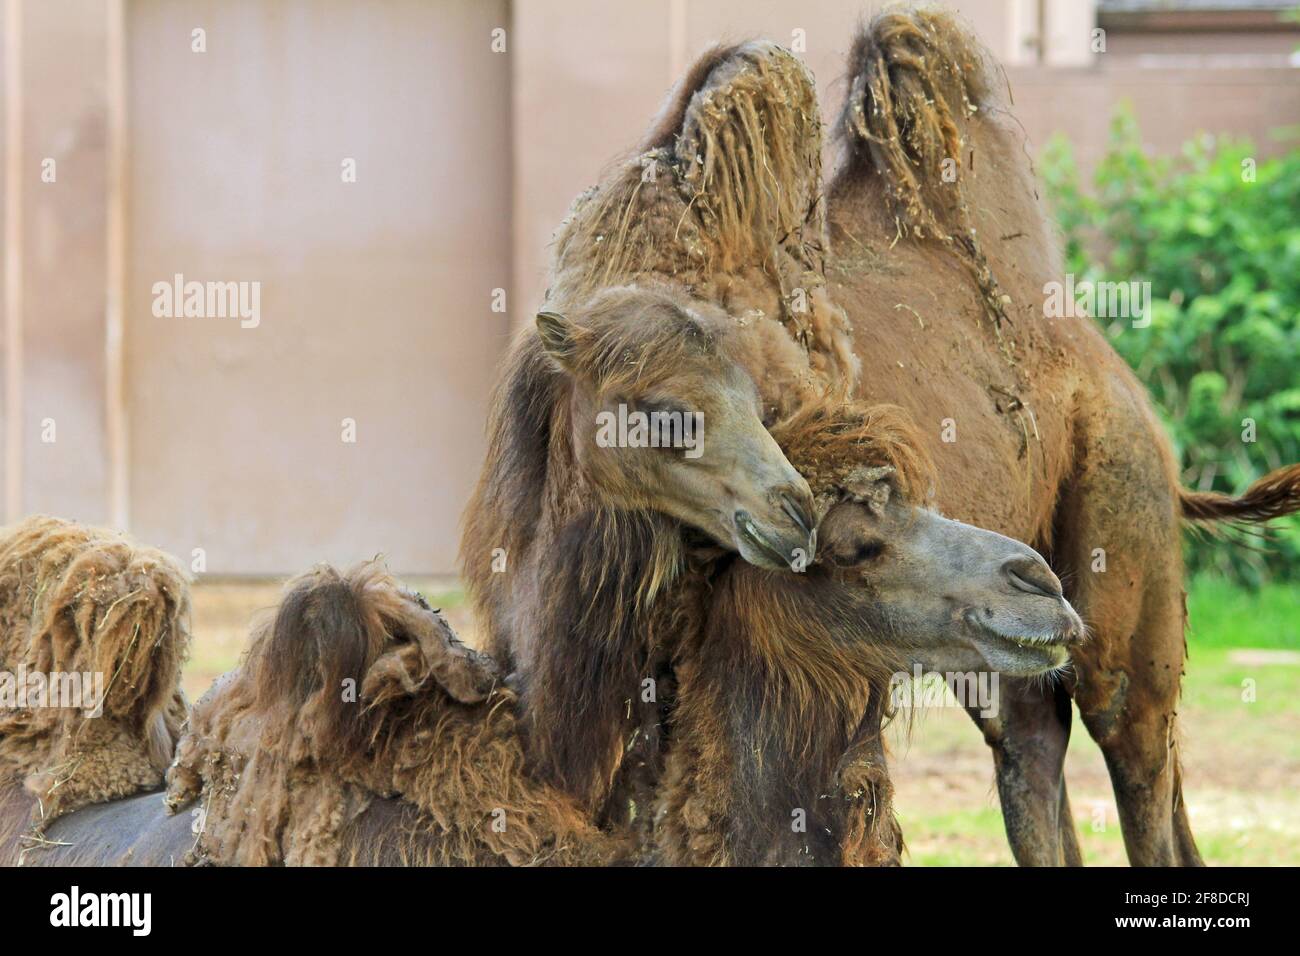 Tenderness between camels Stock Photo